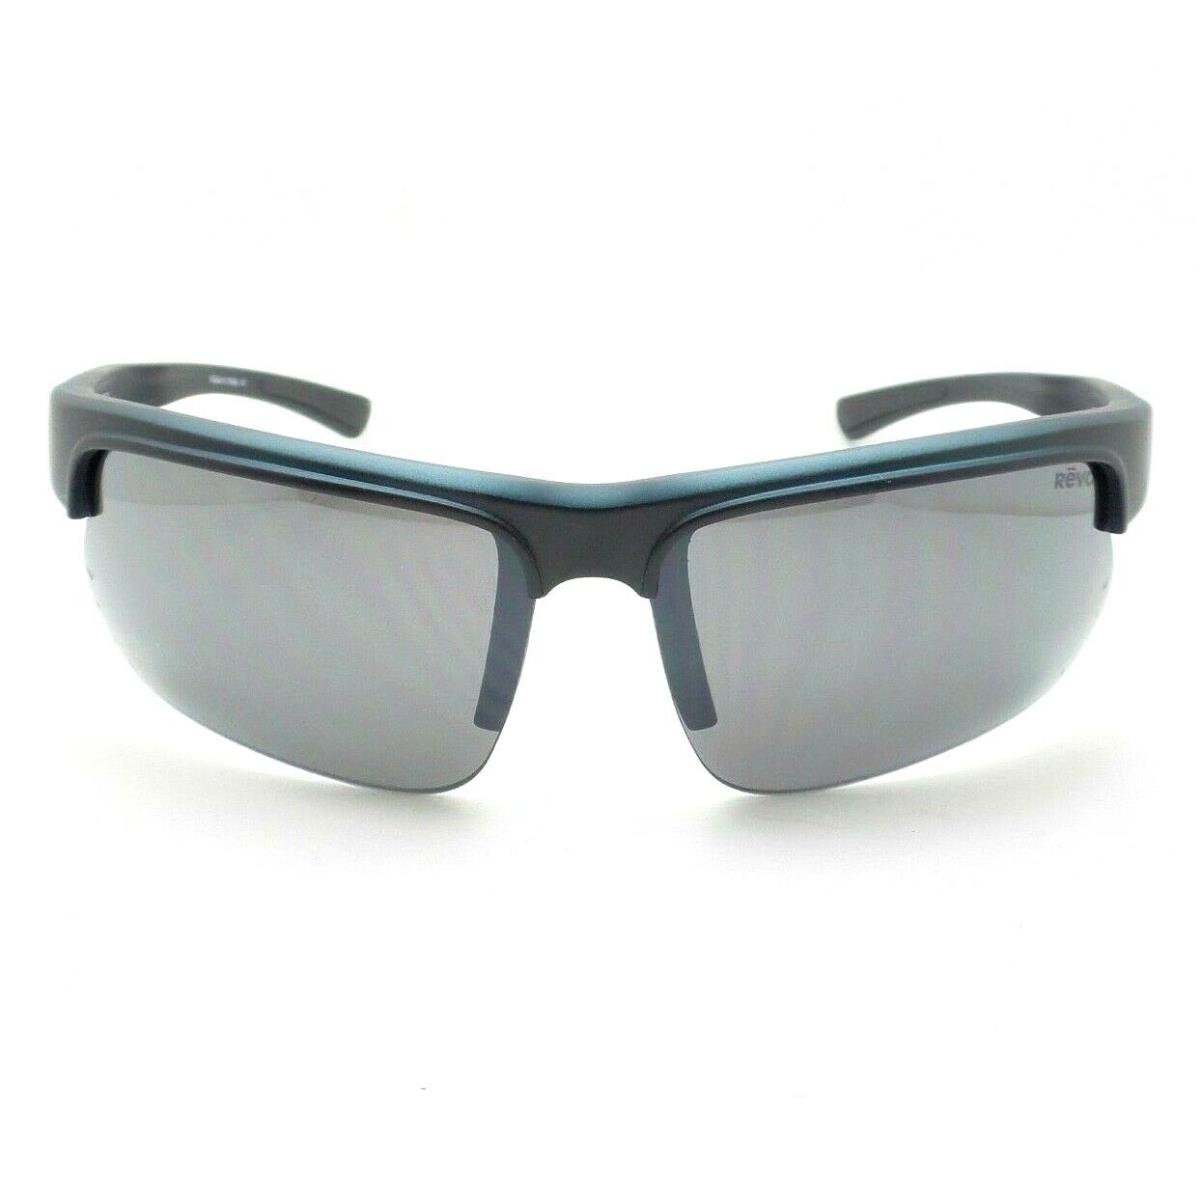 Revo sunglasses  - Matte Black Grey Frame, Graphite Lens